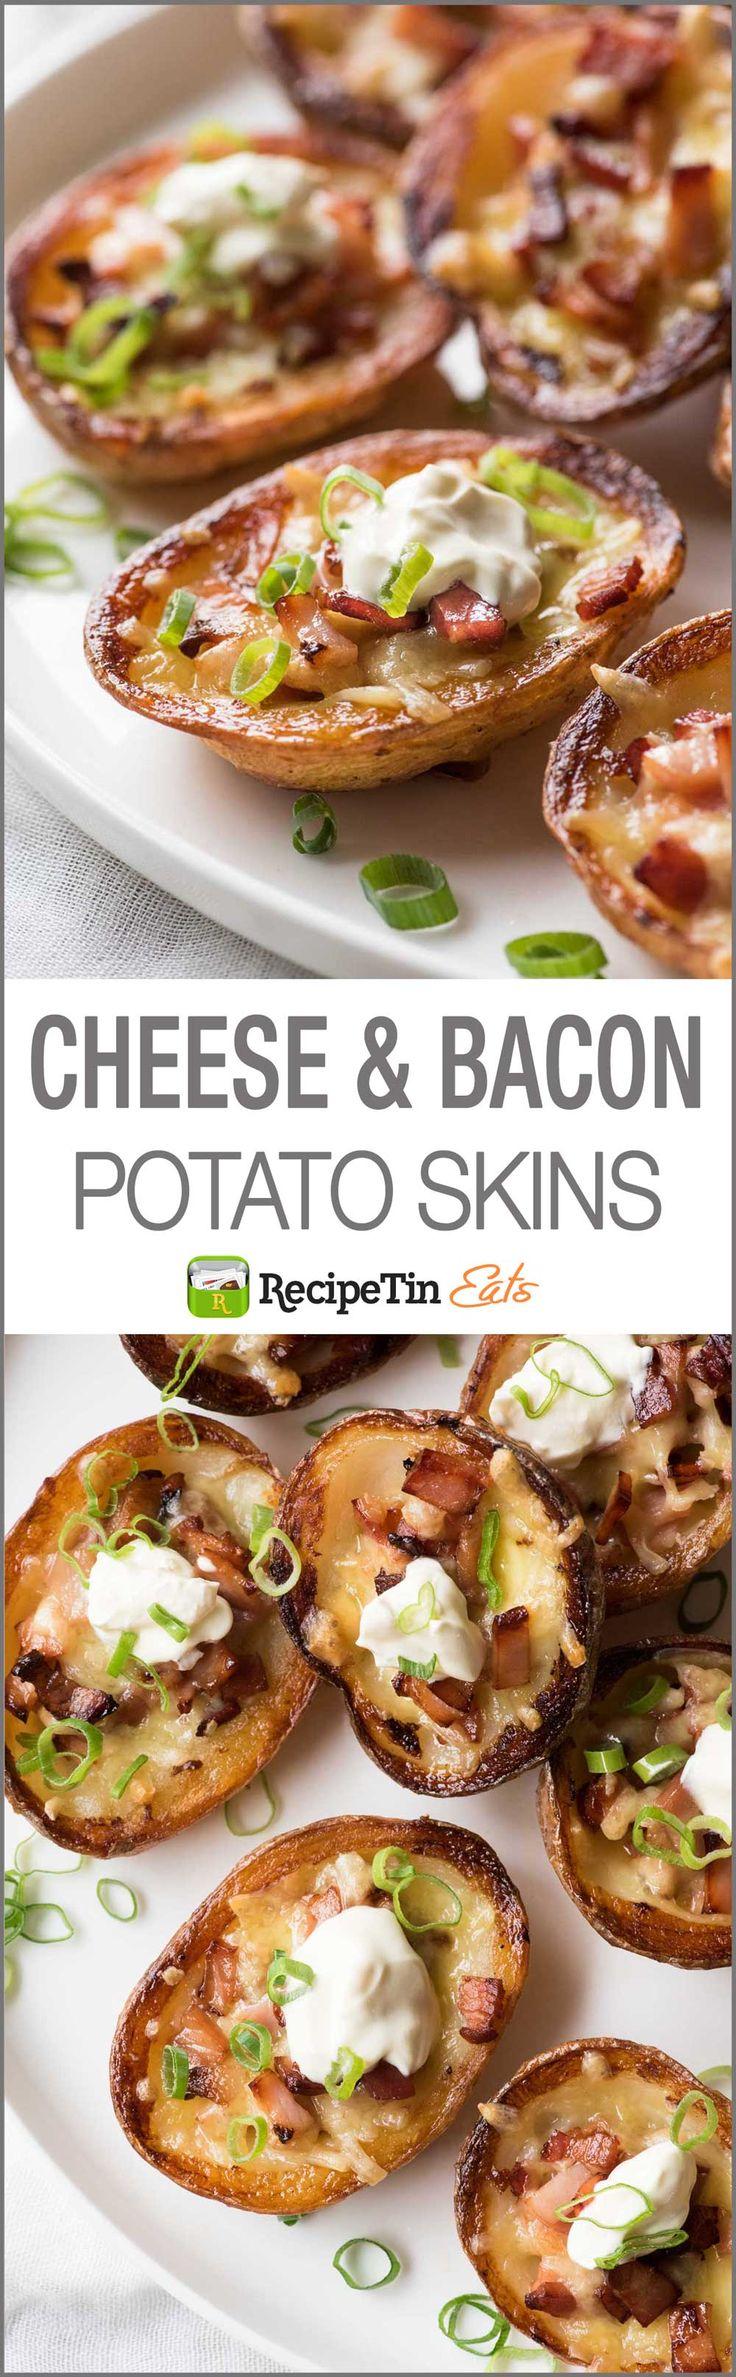 Wedding - Cheese And Bacon Potato Skins